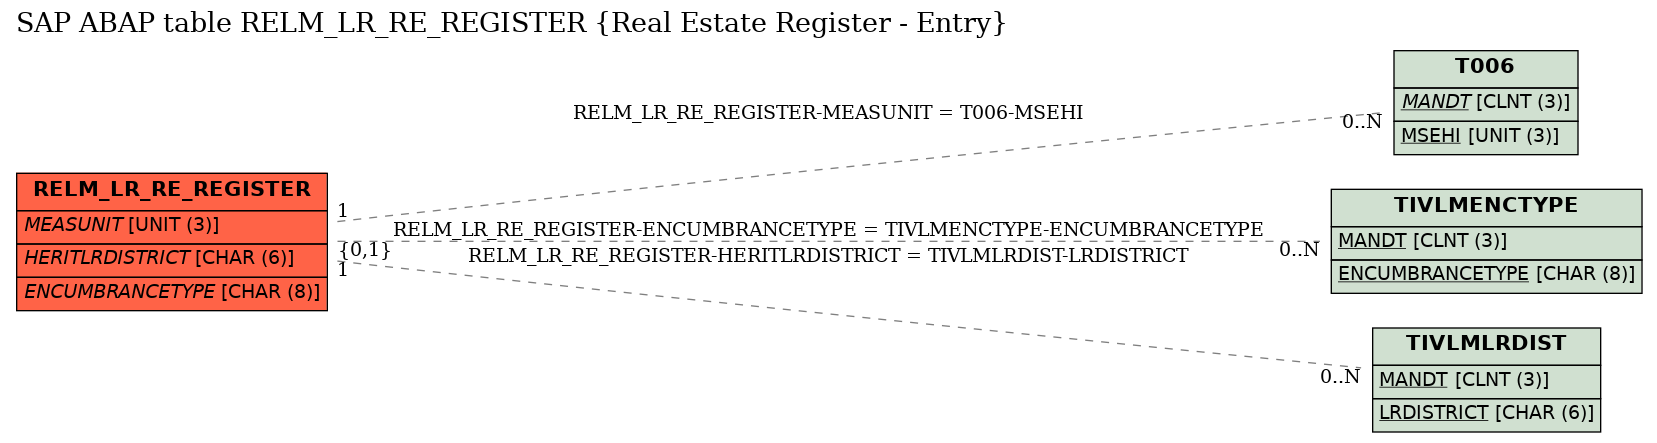 E-R Diagram for table RELM_LR_RE_REGISTER (Real Estate Register - Entry)